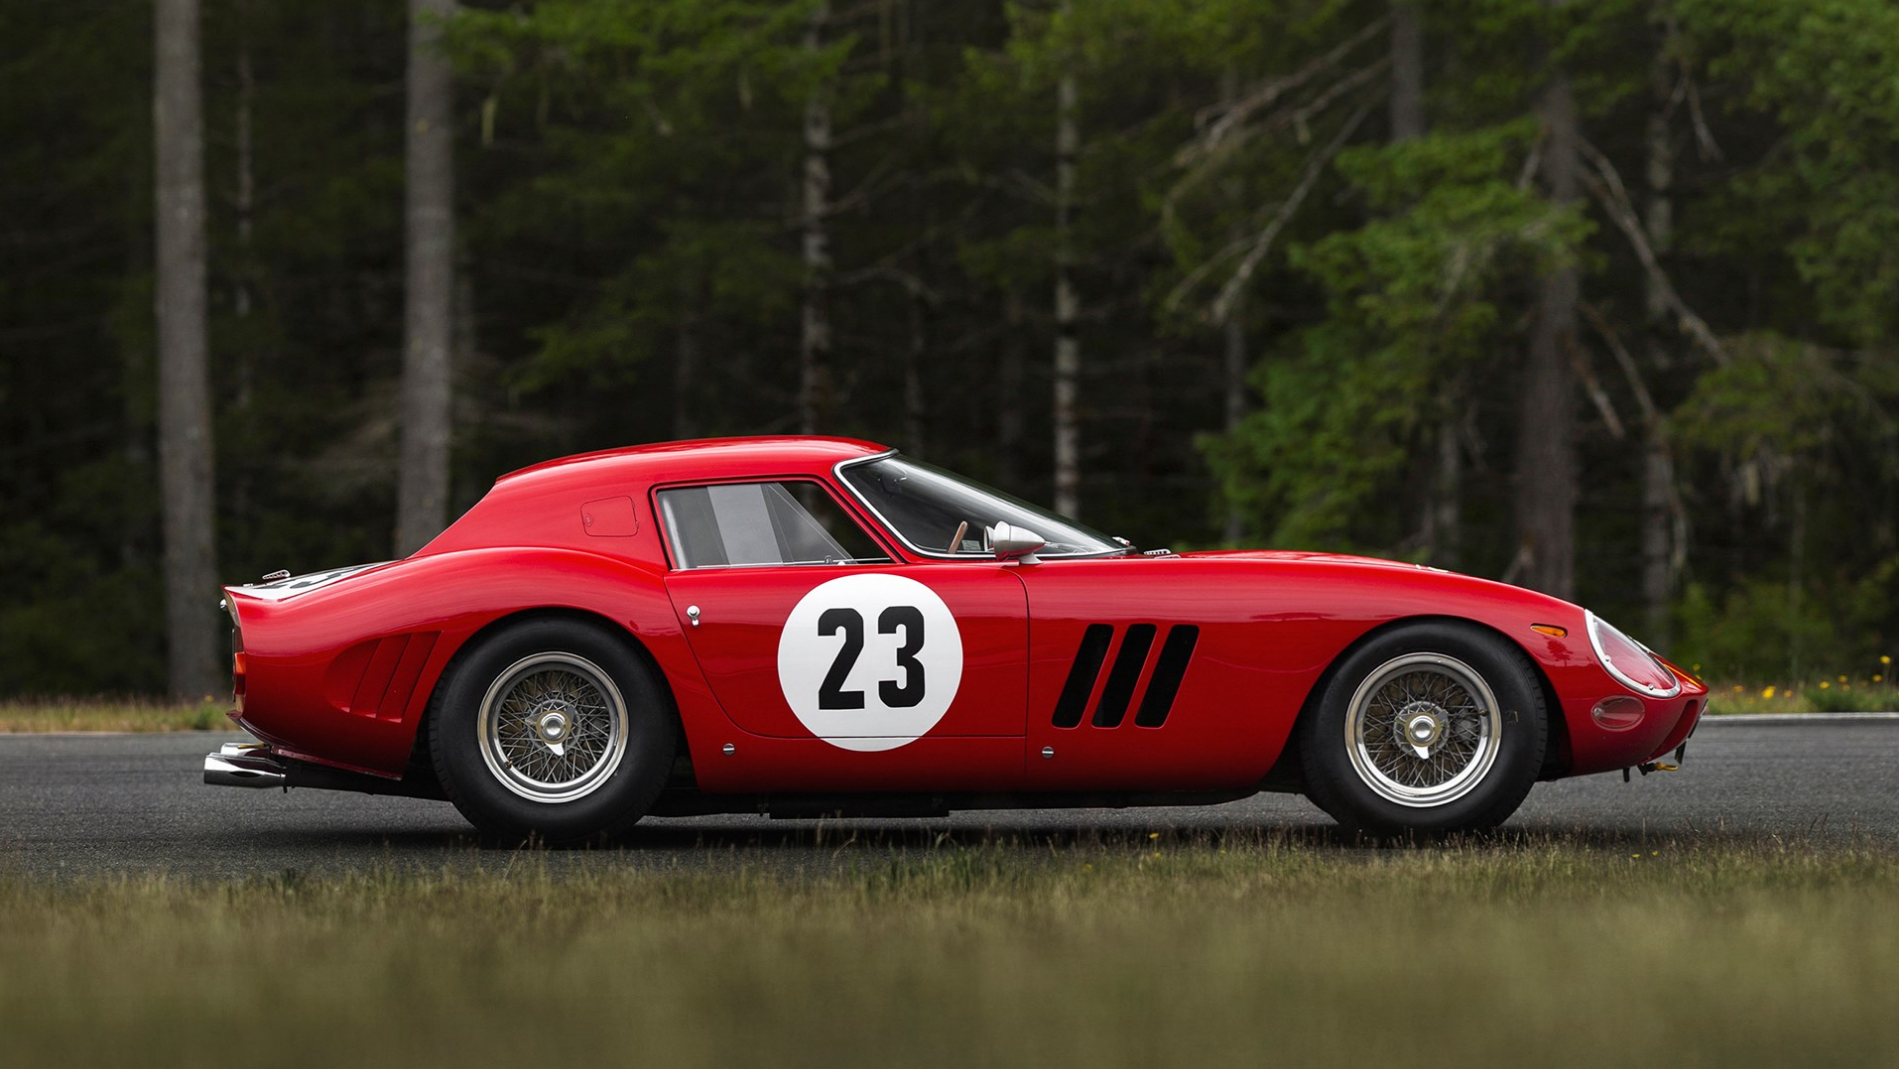 1962 Ferrari 250 GTO sold for a record auction price of $48.4 million